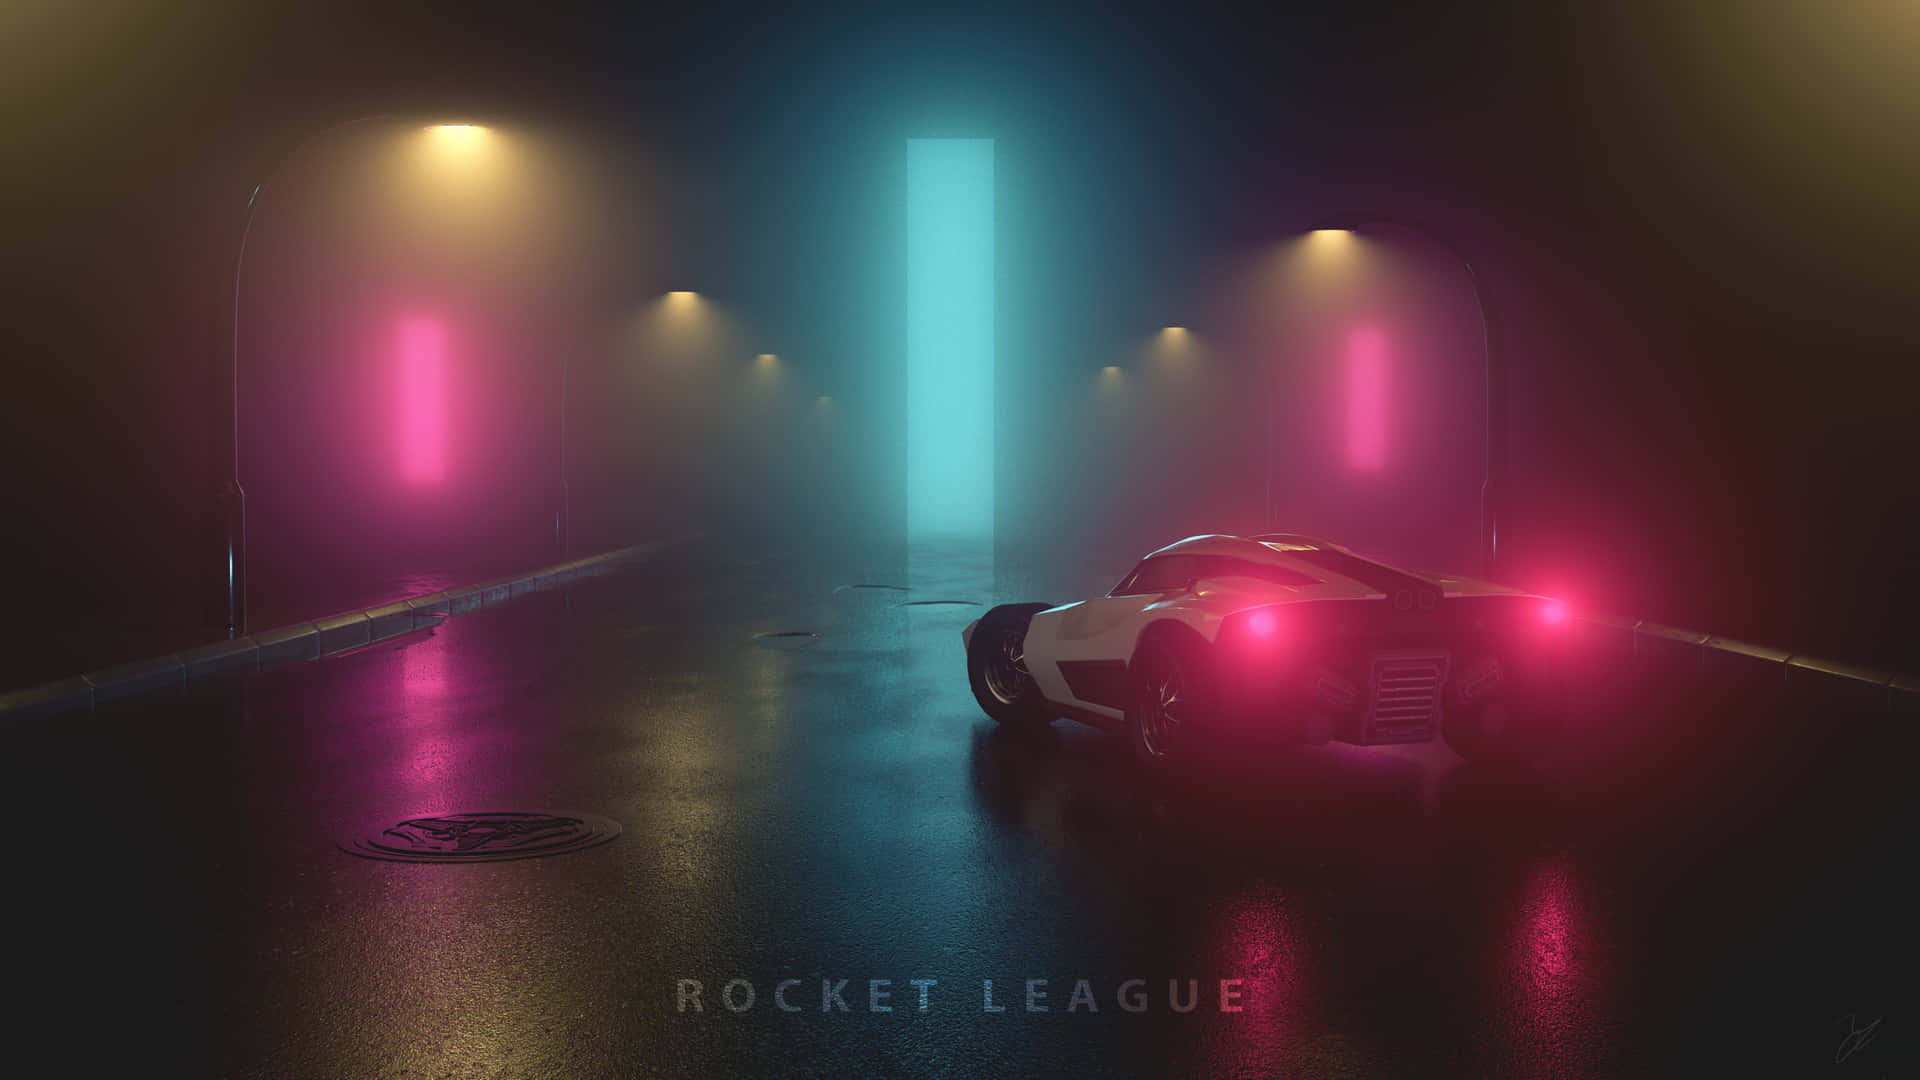 720p Rocket League Background Poster Lights